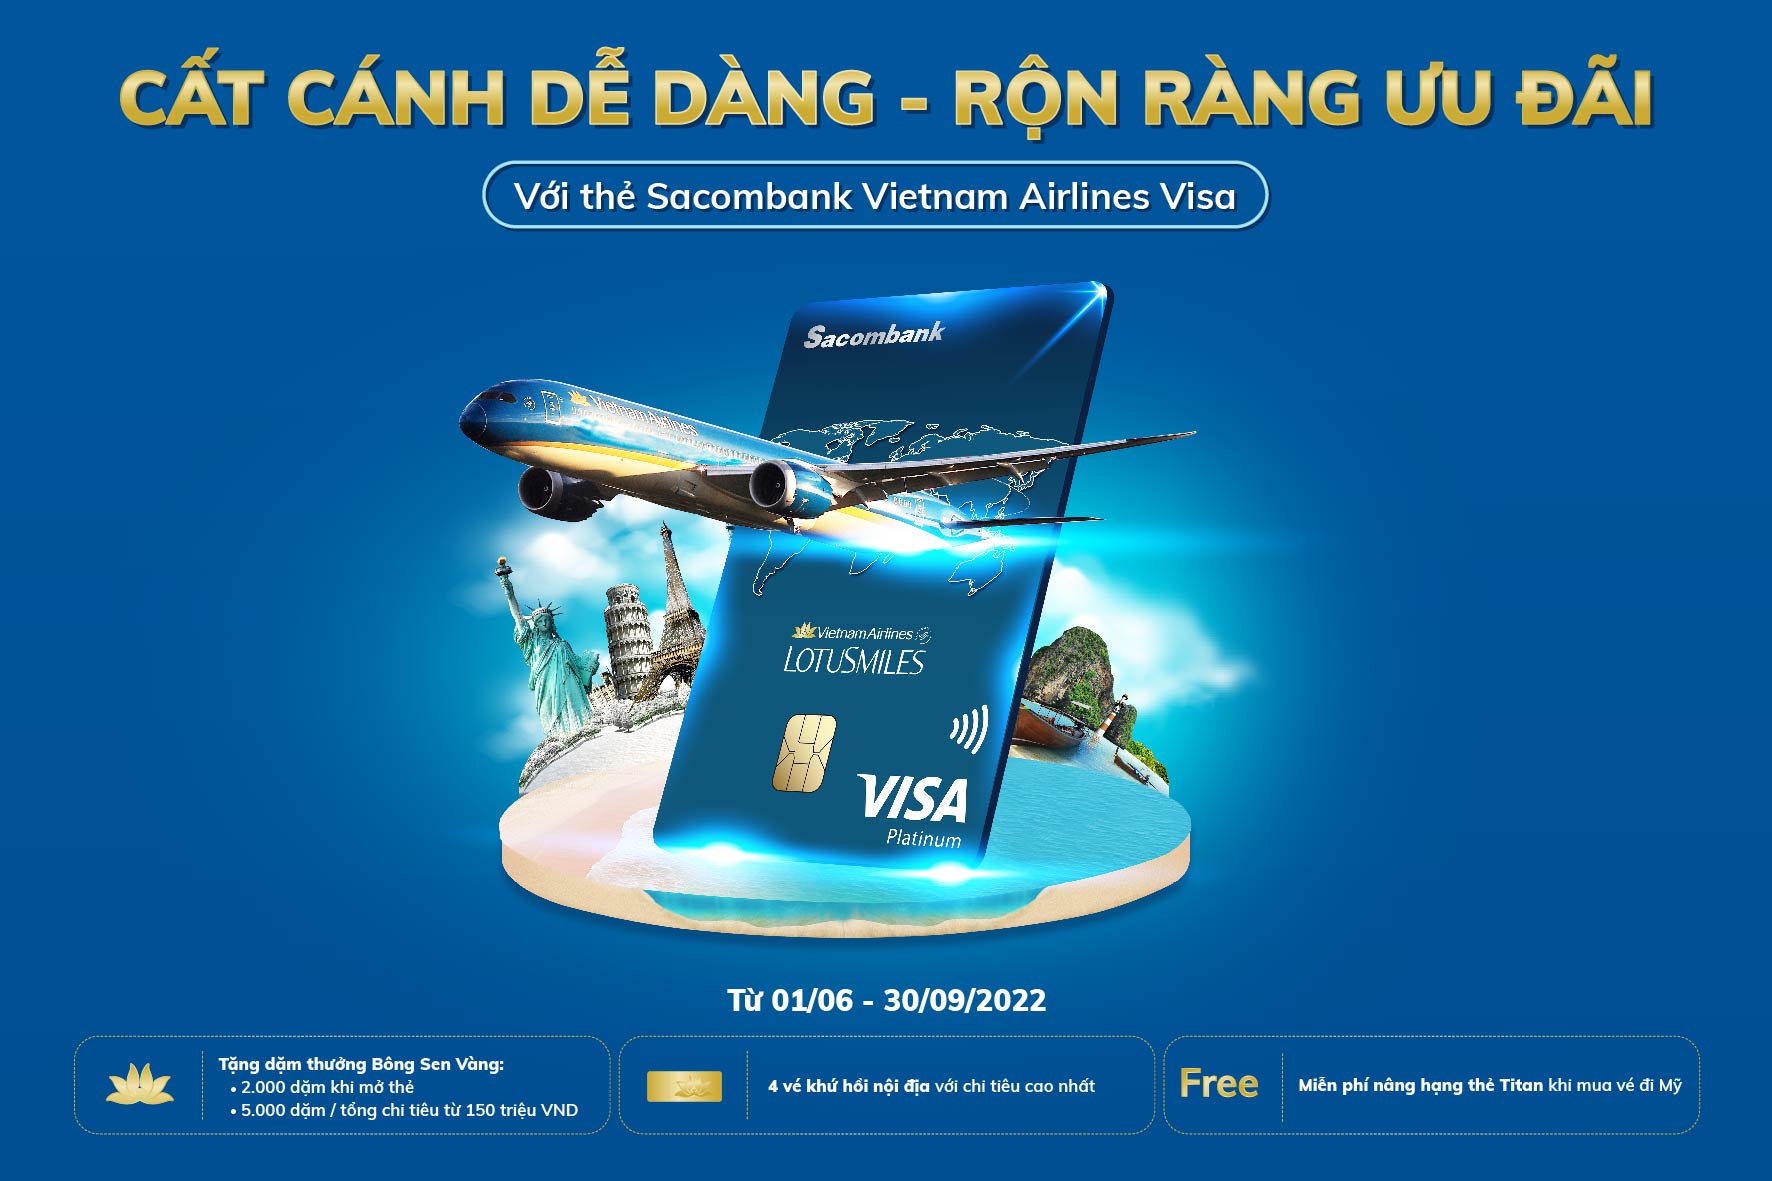 cat canh de dang ron rang uu dai cung the sacombank vietnam airlines